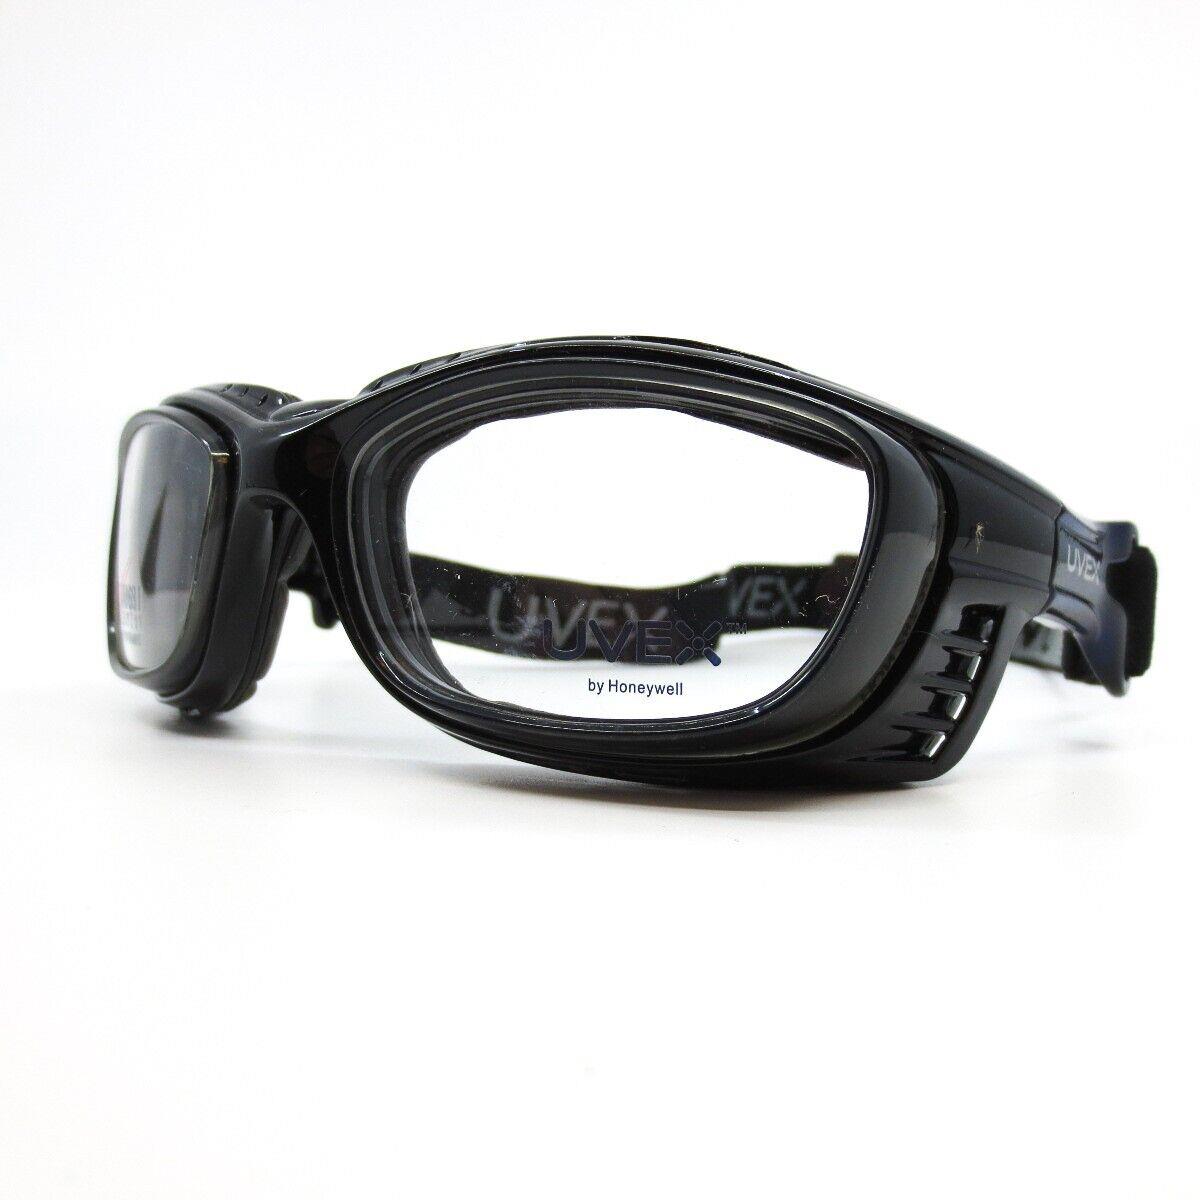 Uvex Safety Goggles Eyeglasses Frames SW09 Black Z87-2 with Strap 56-21-127